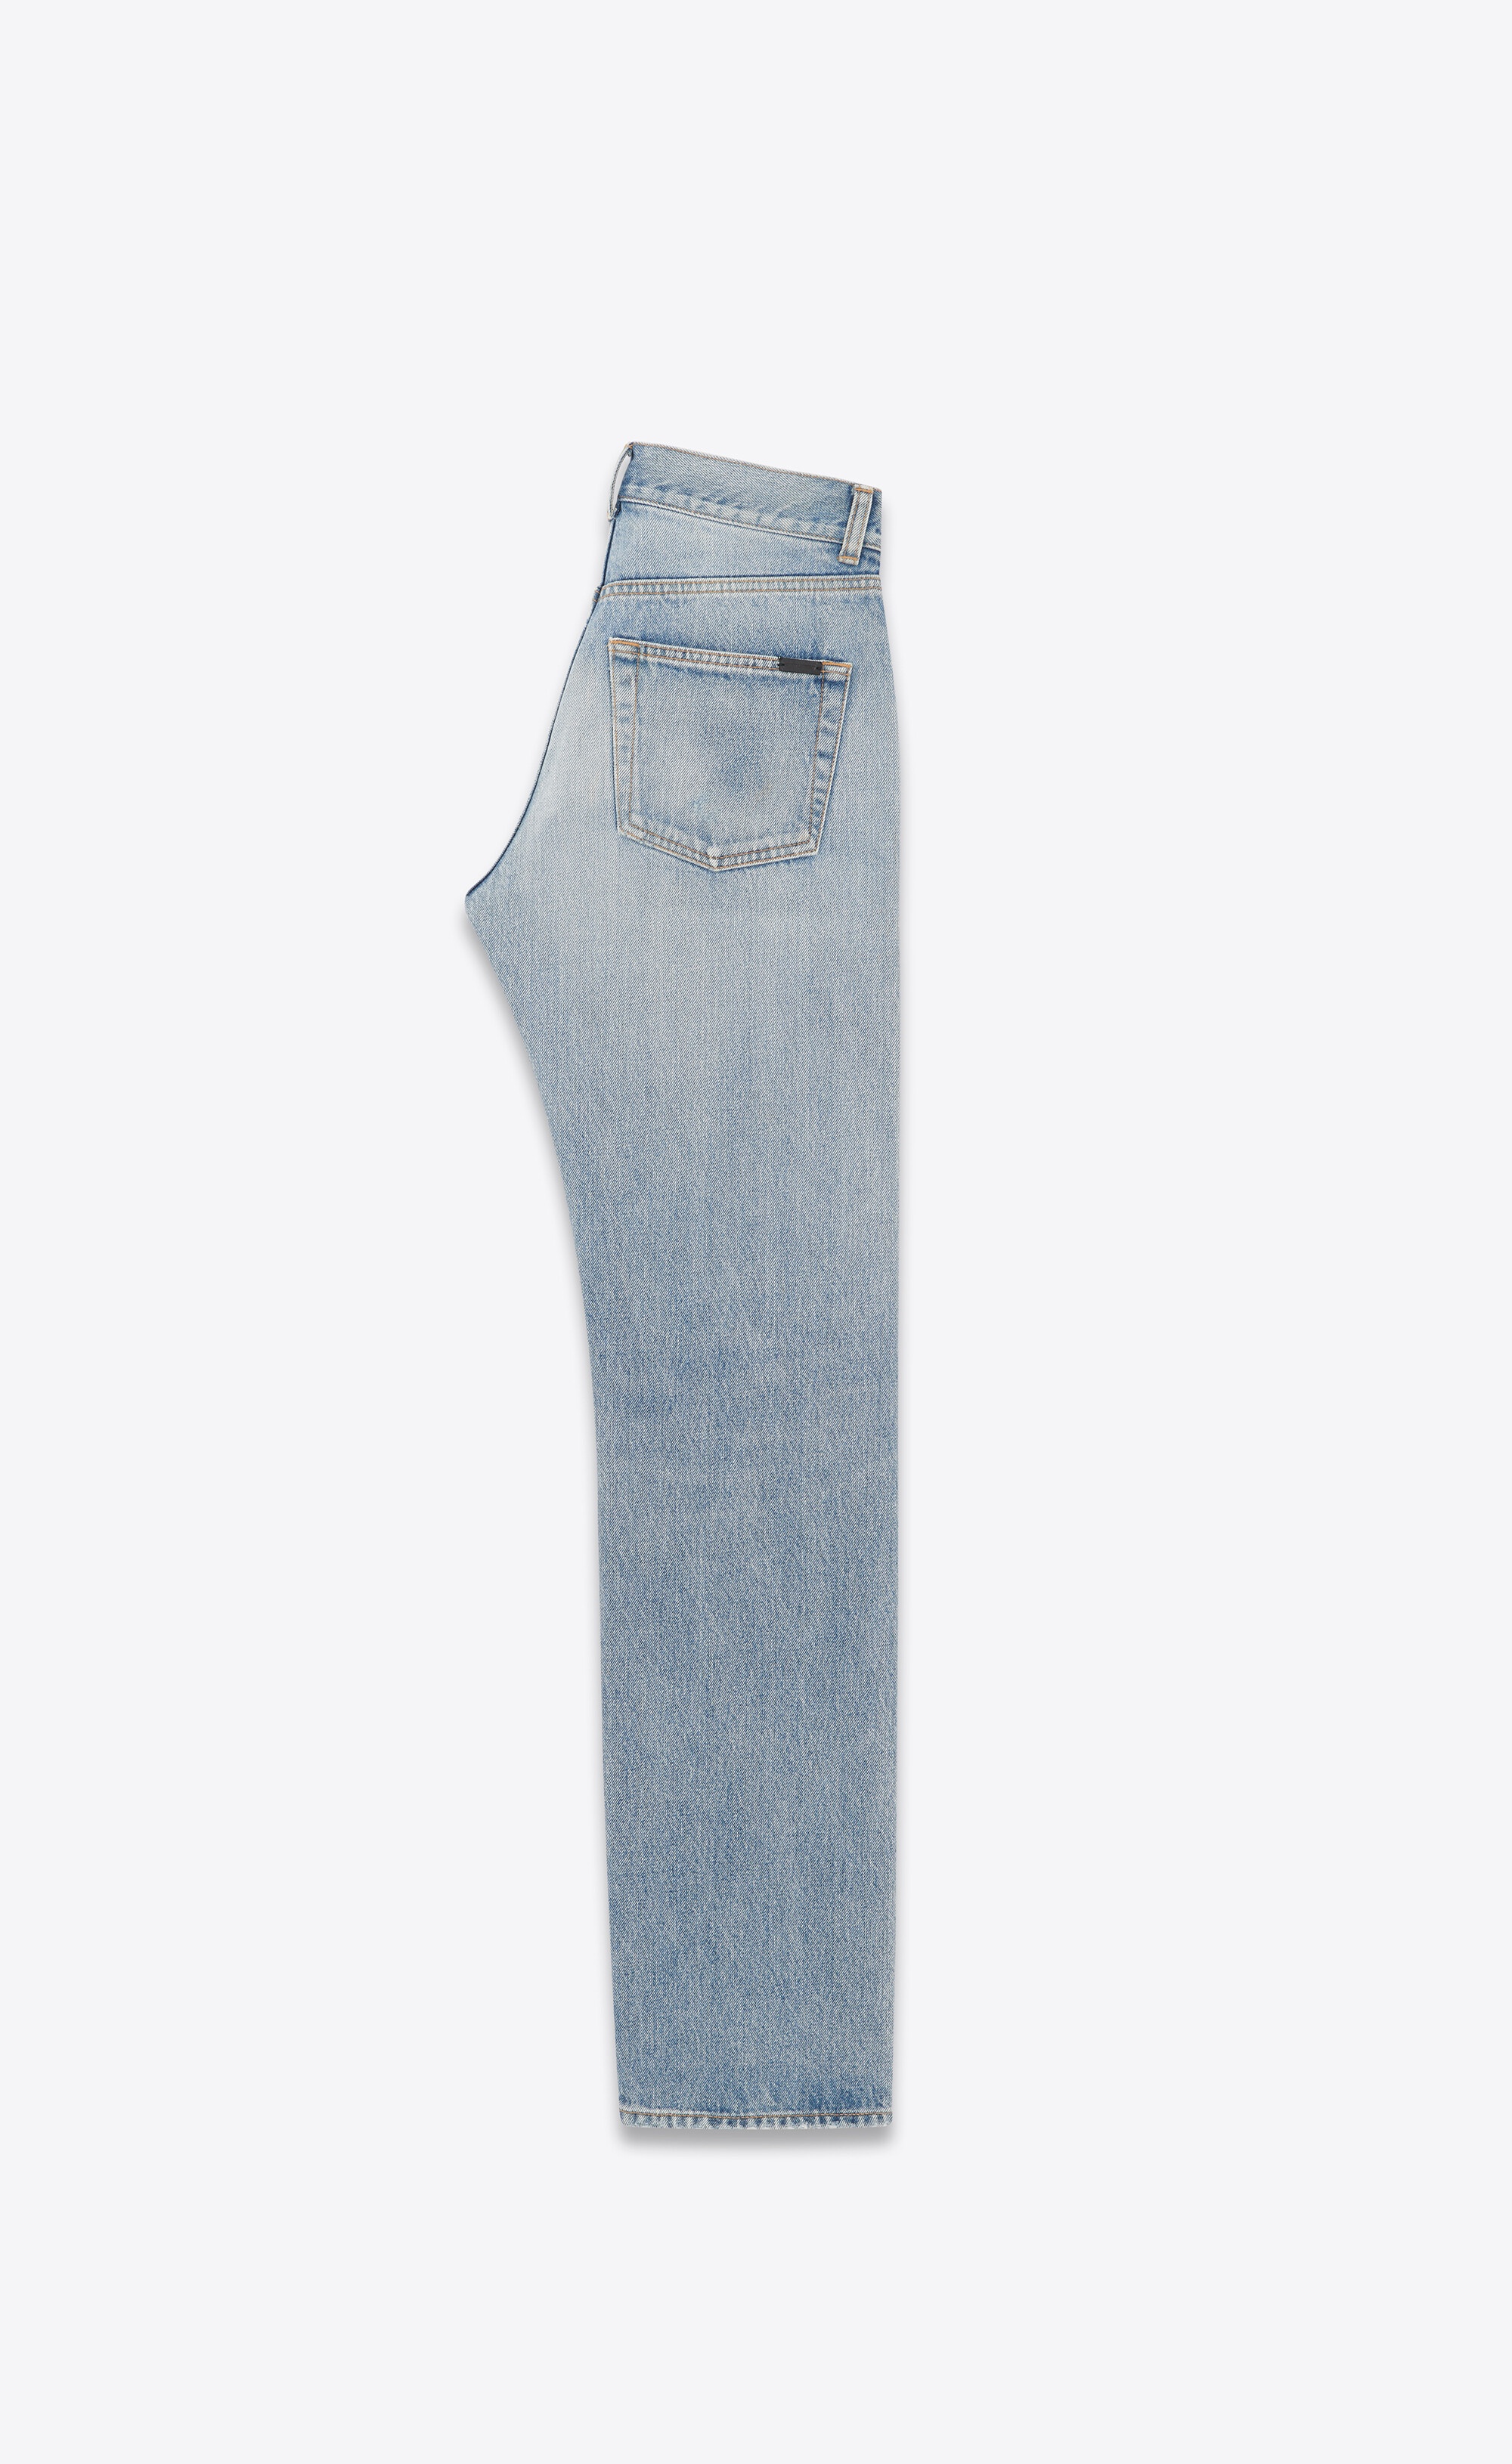 cassandre jeans in hawaii blue denim - 2